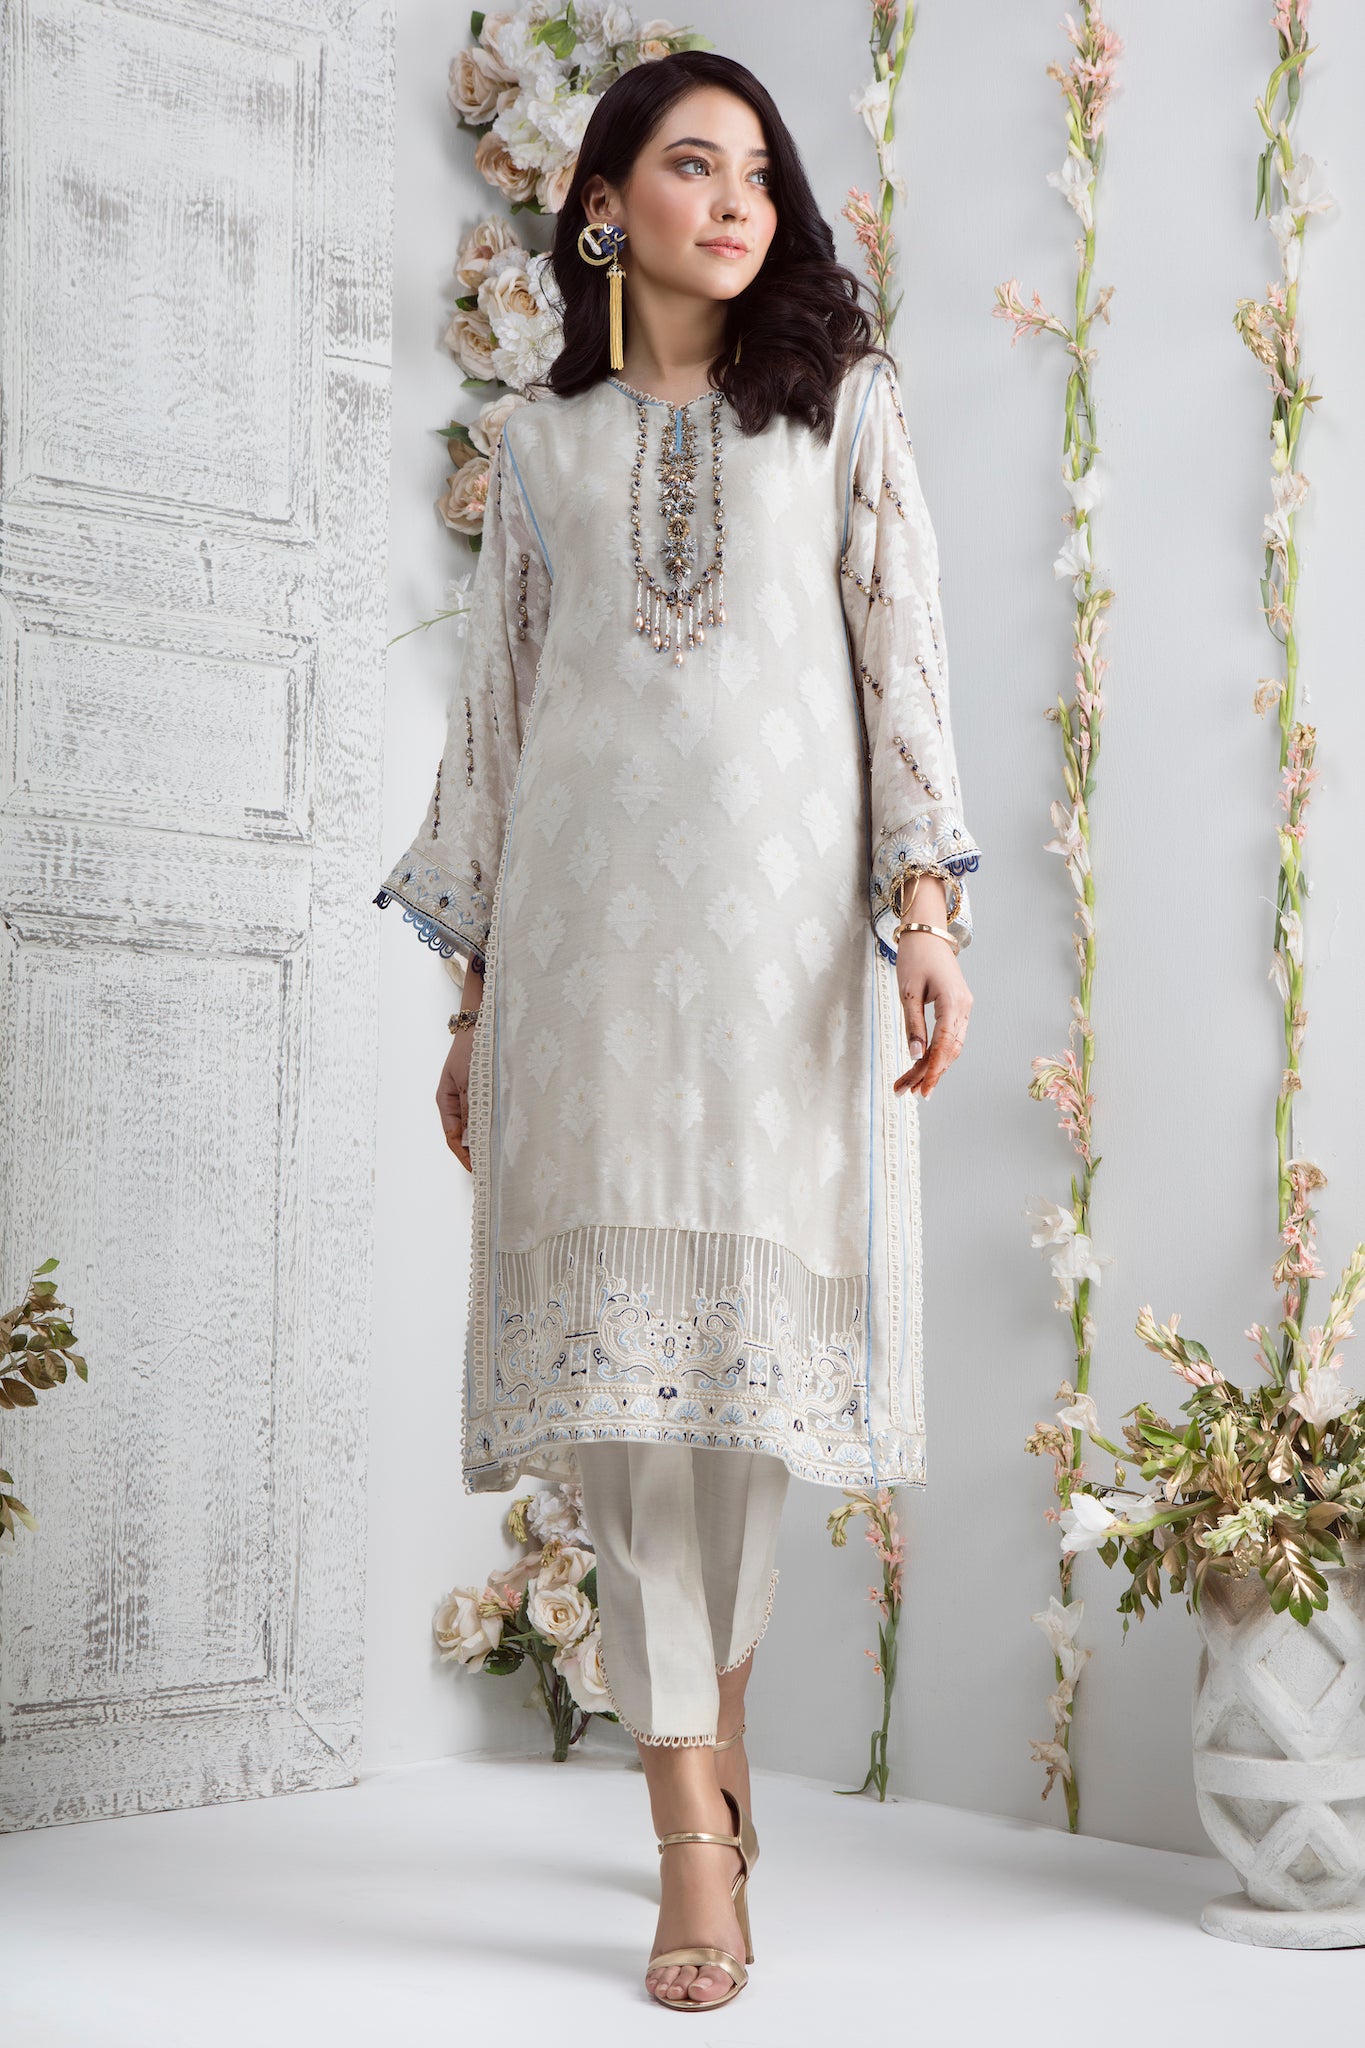 Spring Rain | Pakistani Designer Outfit | Sarosh Salman